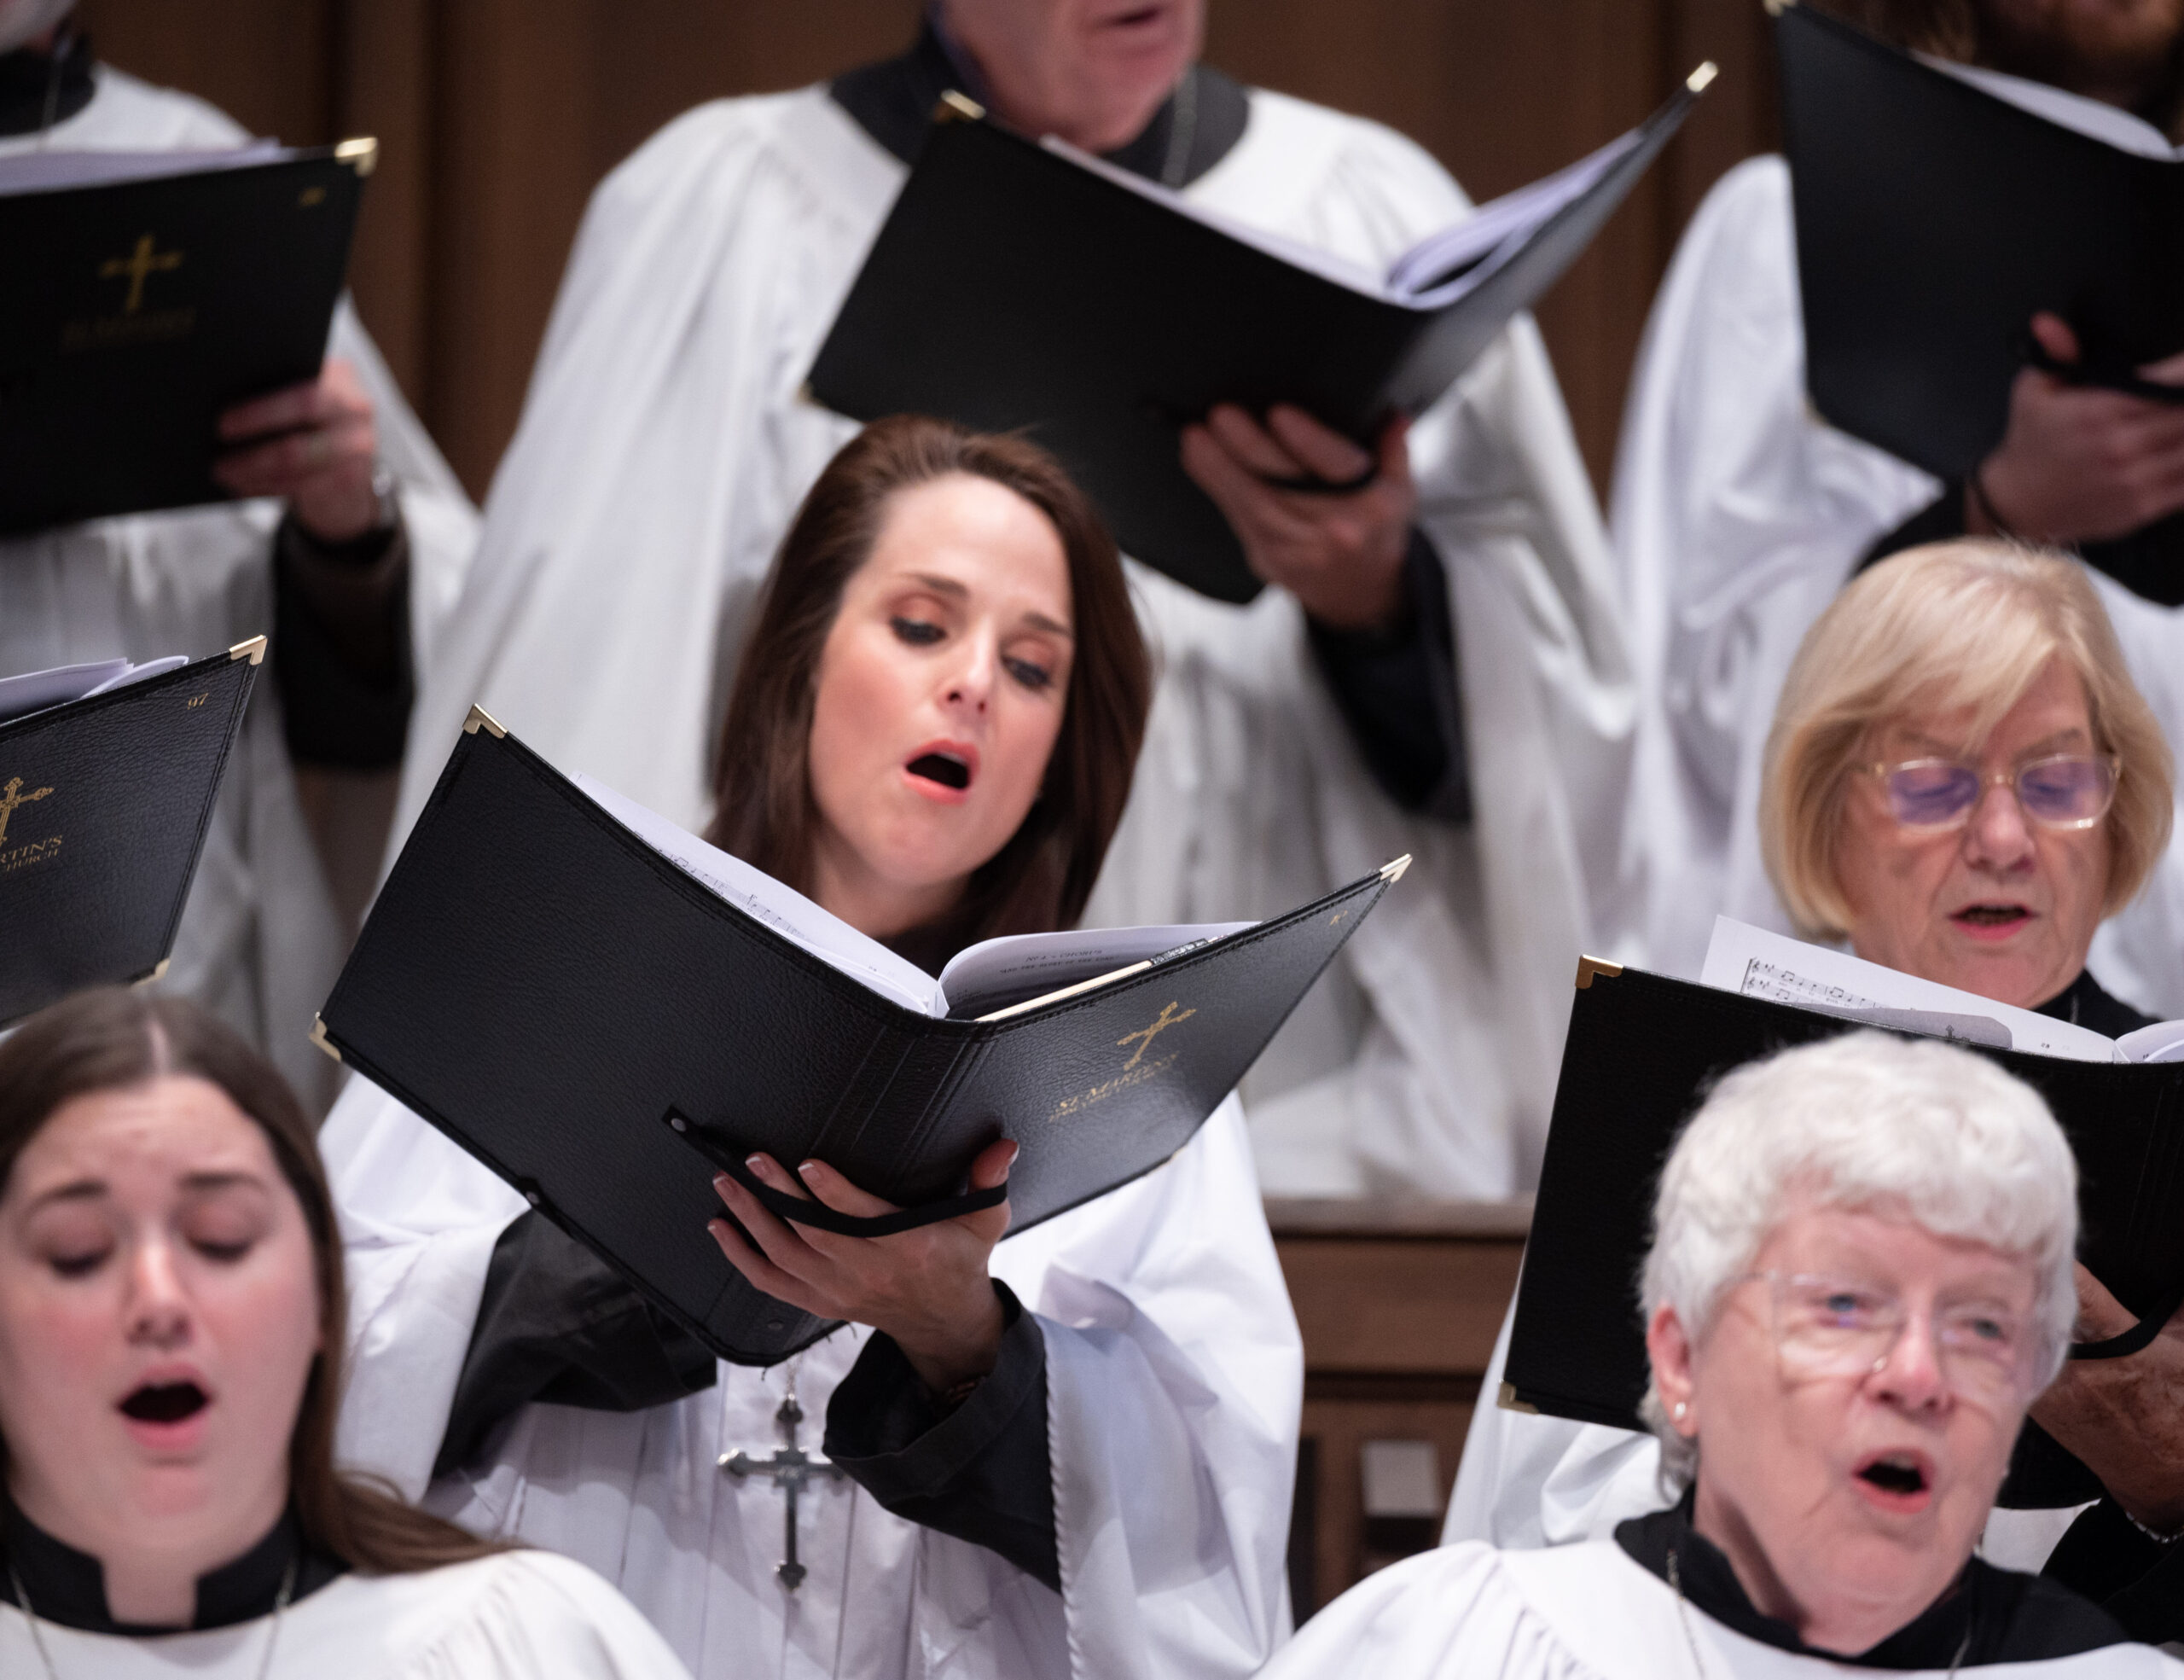 Featured image for “Parish Choir”